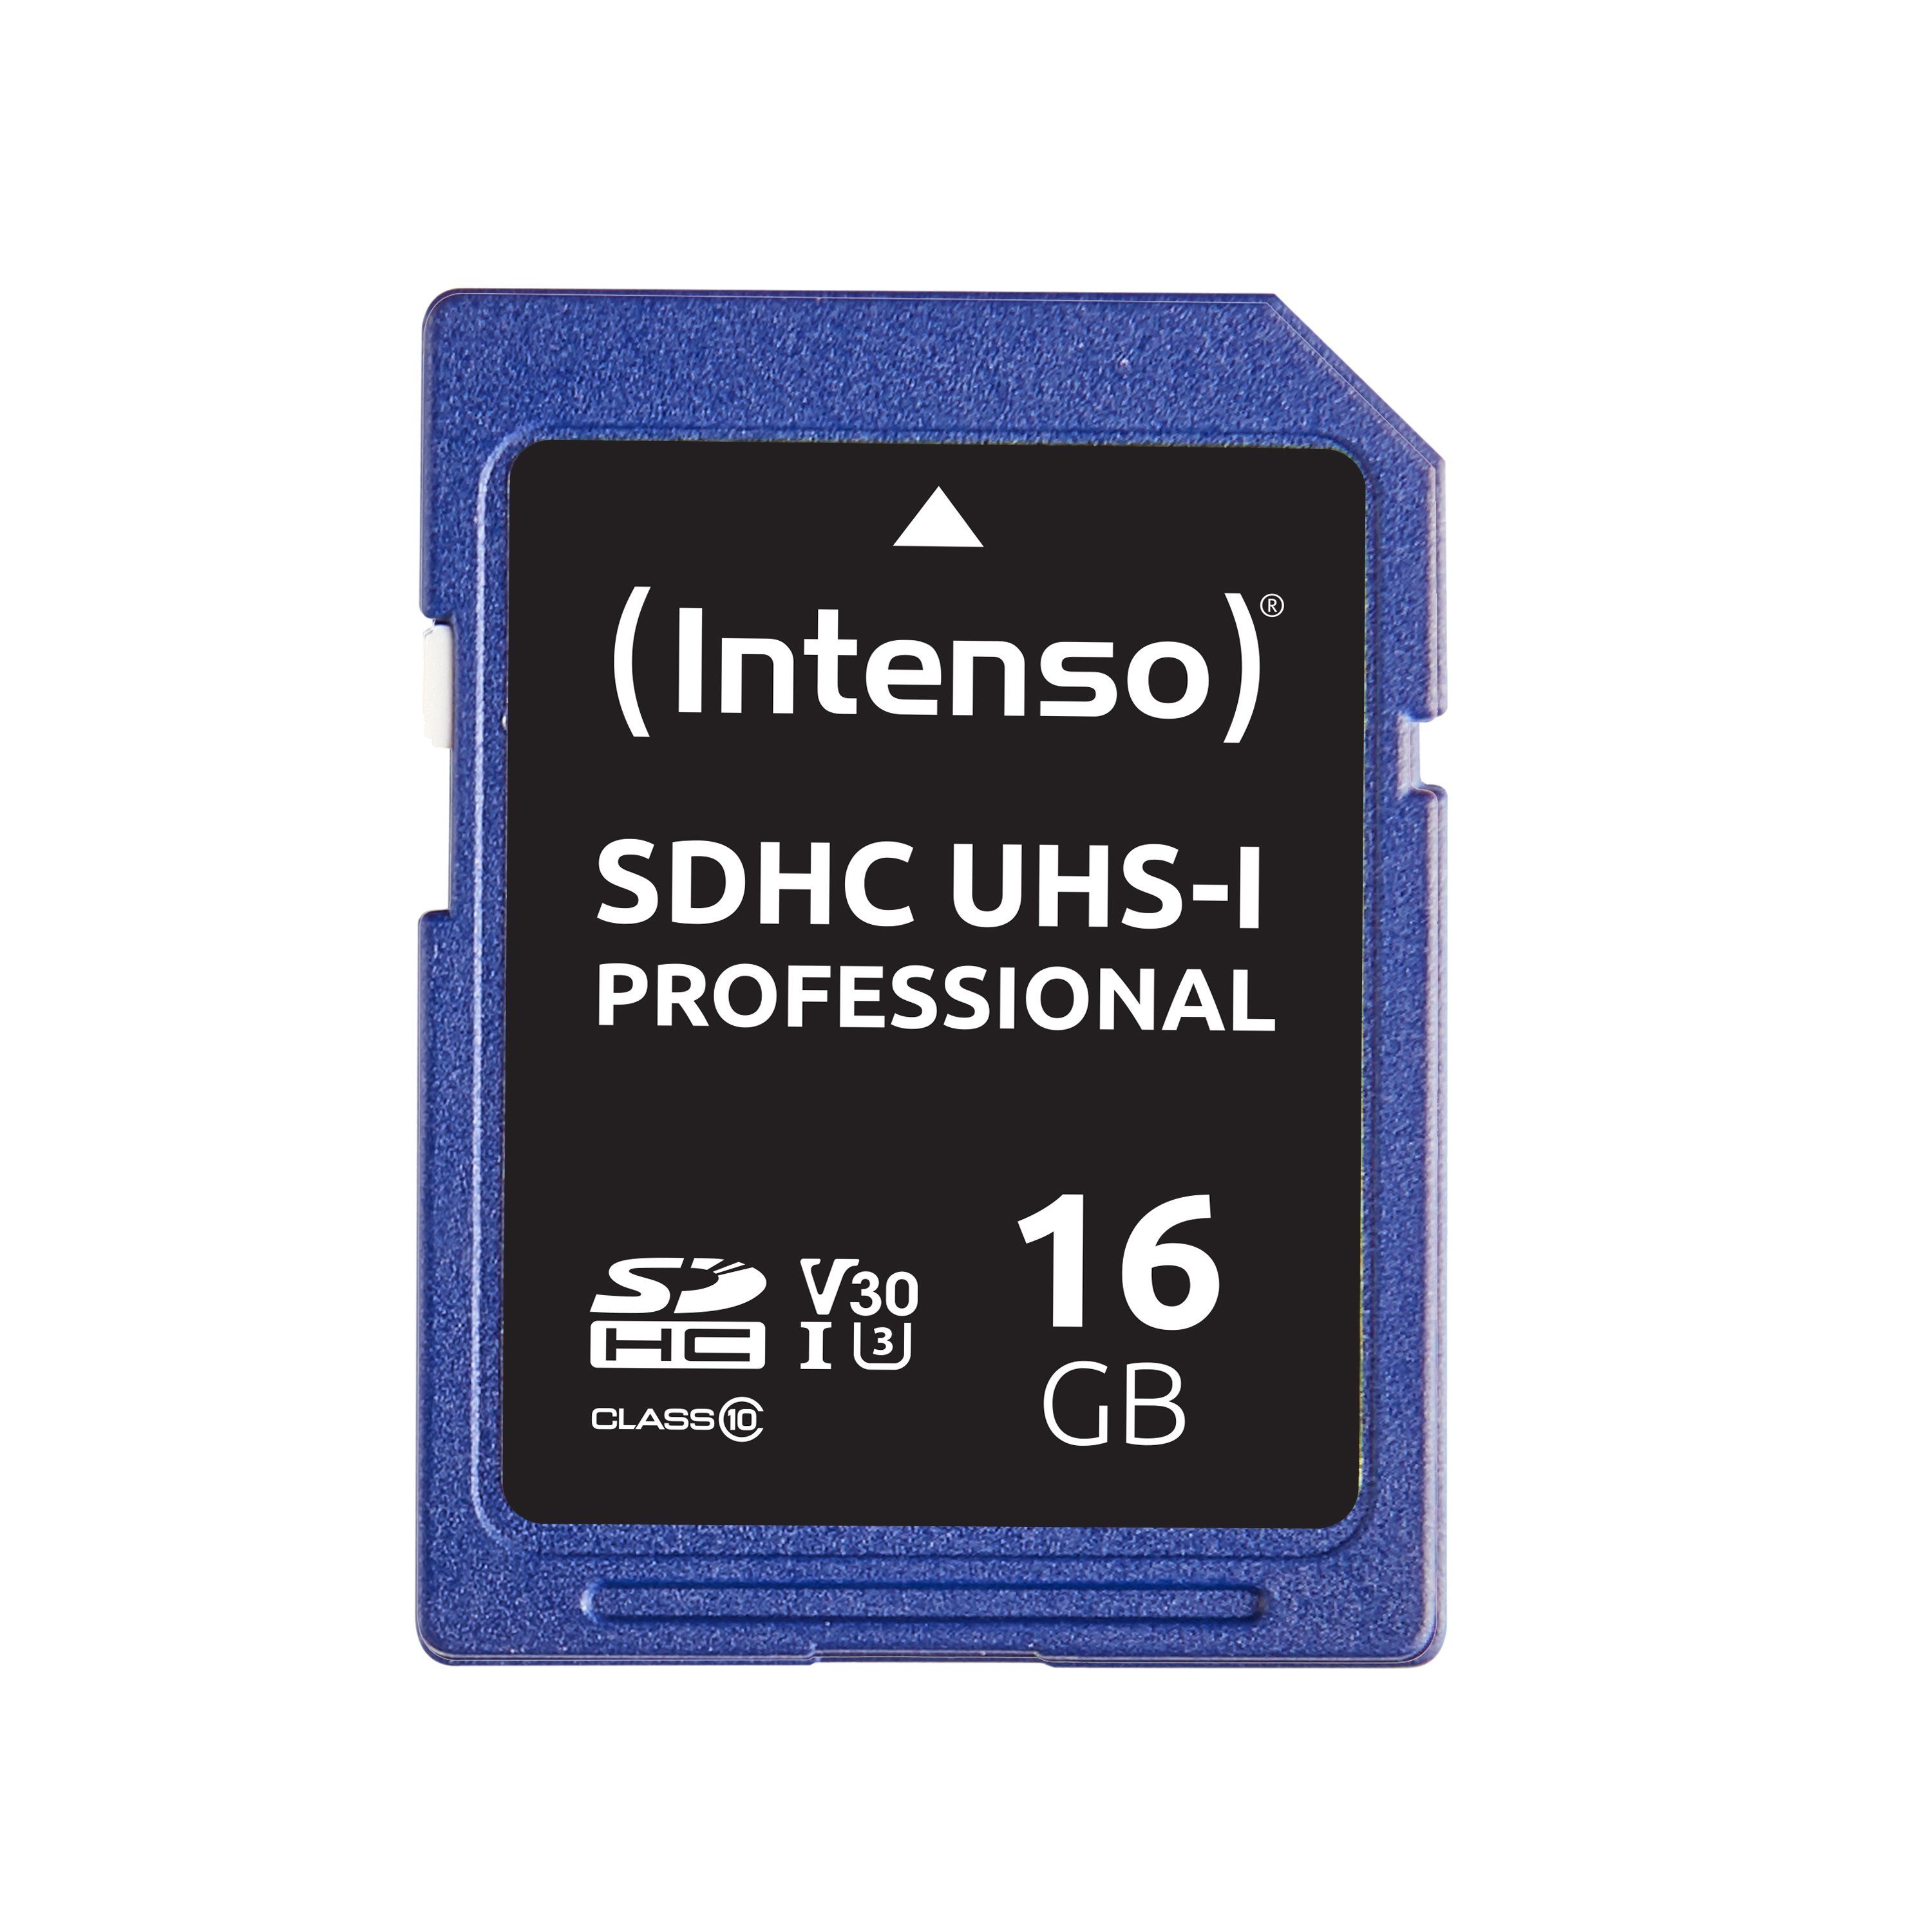 Card MB/s 90 16GB SDHC INTENSO GB, SD UHS-I SD Professional, Speicherkarte, 16